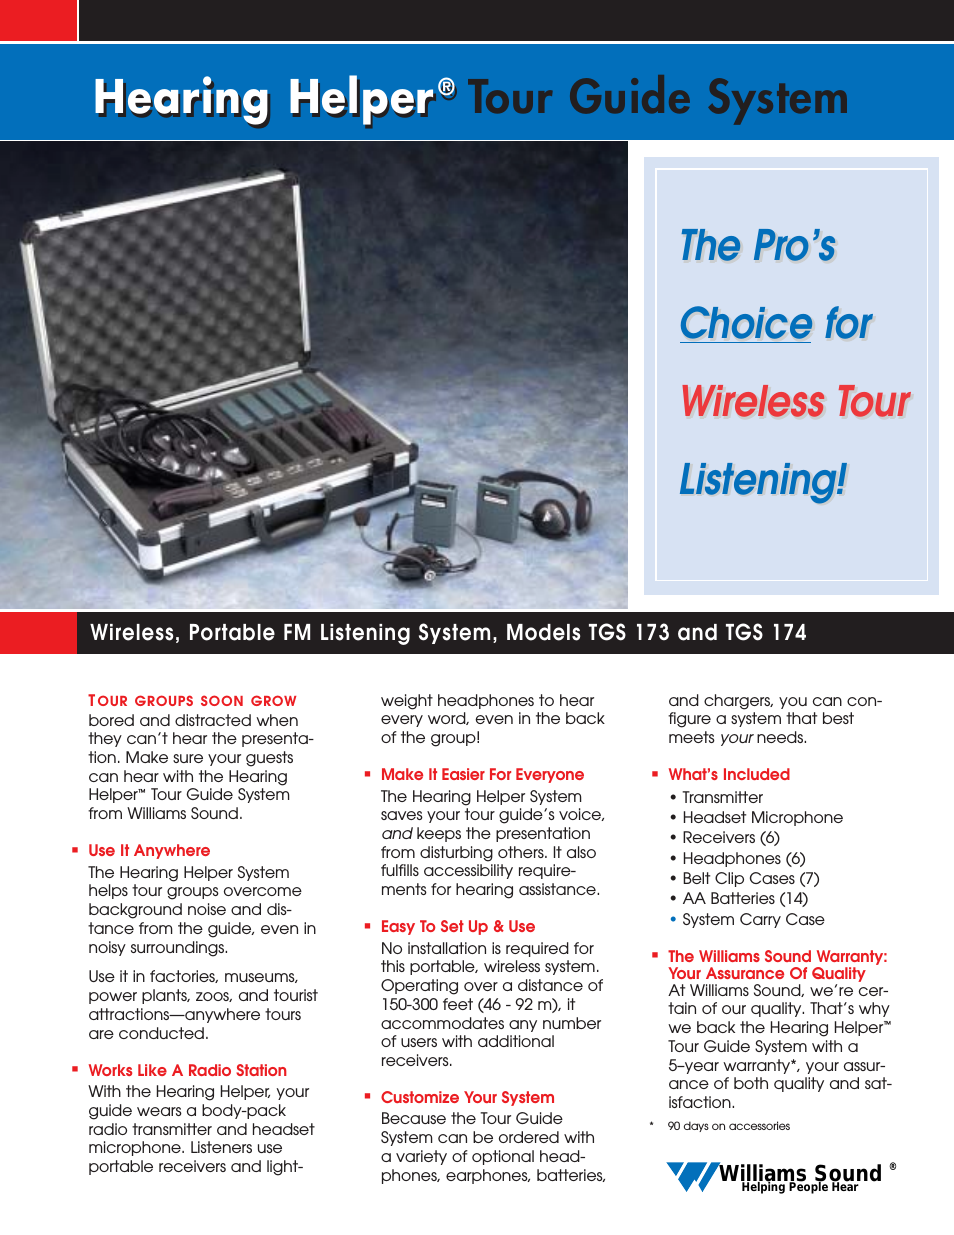 Portable FM Listening System TGS 173